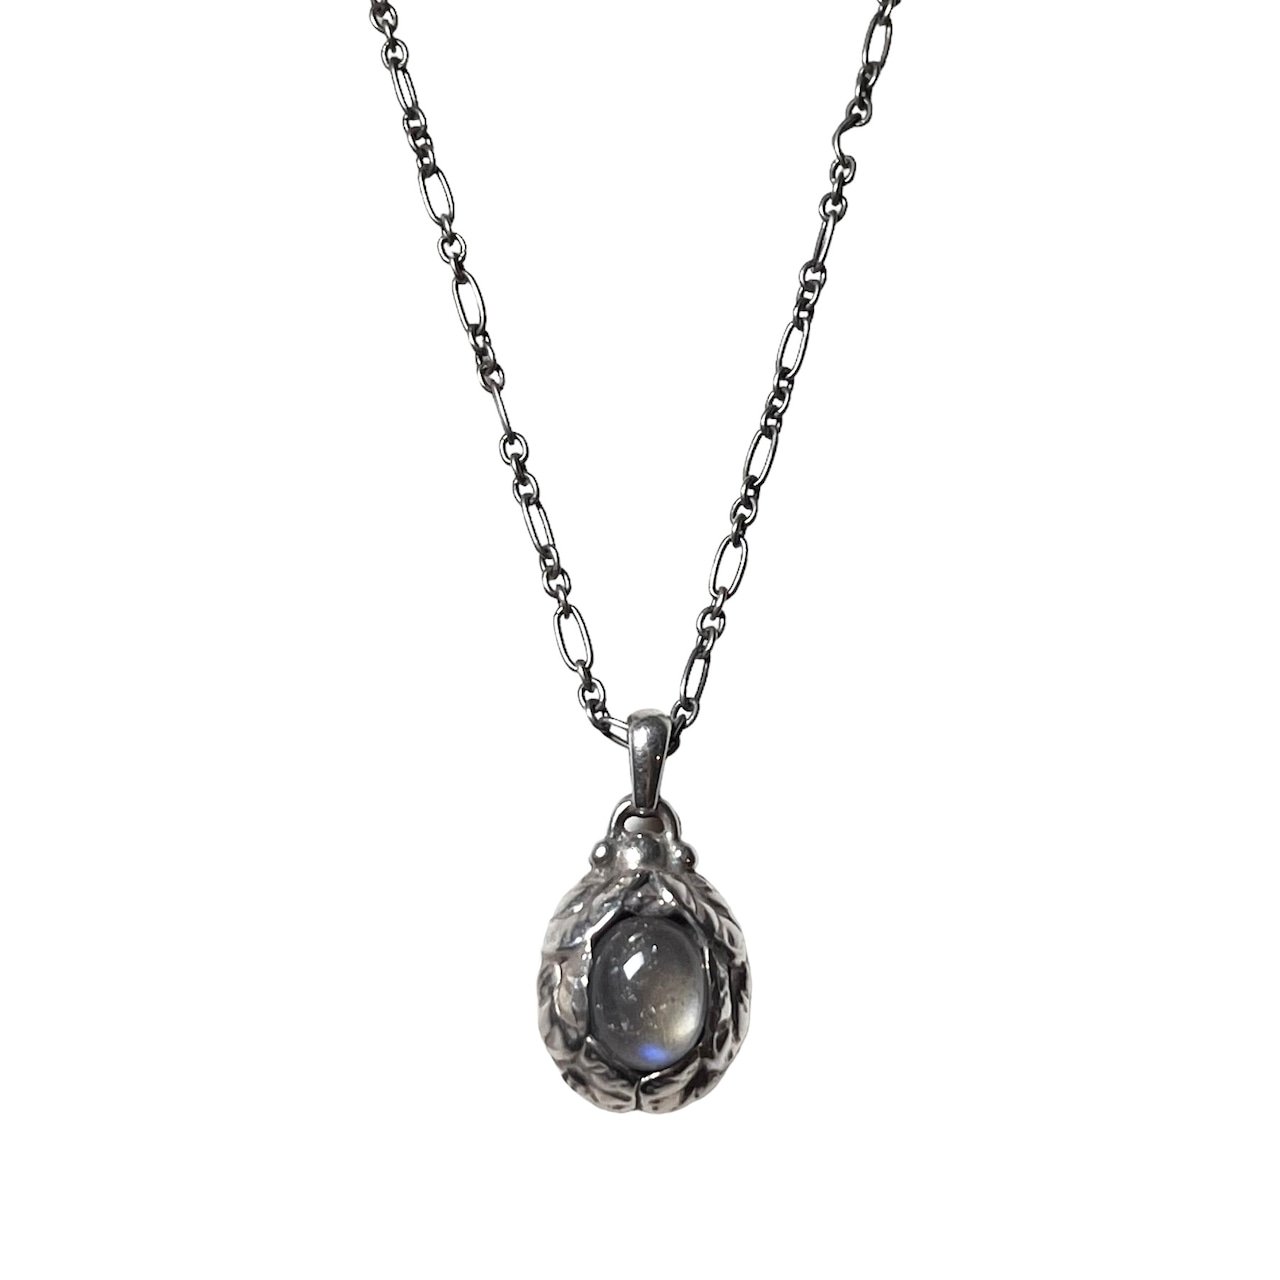 1997's GEORG JENSEN silver year pendant necklace set with labradorite